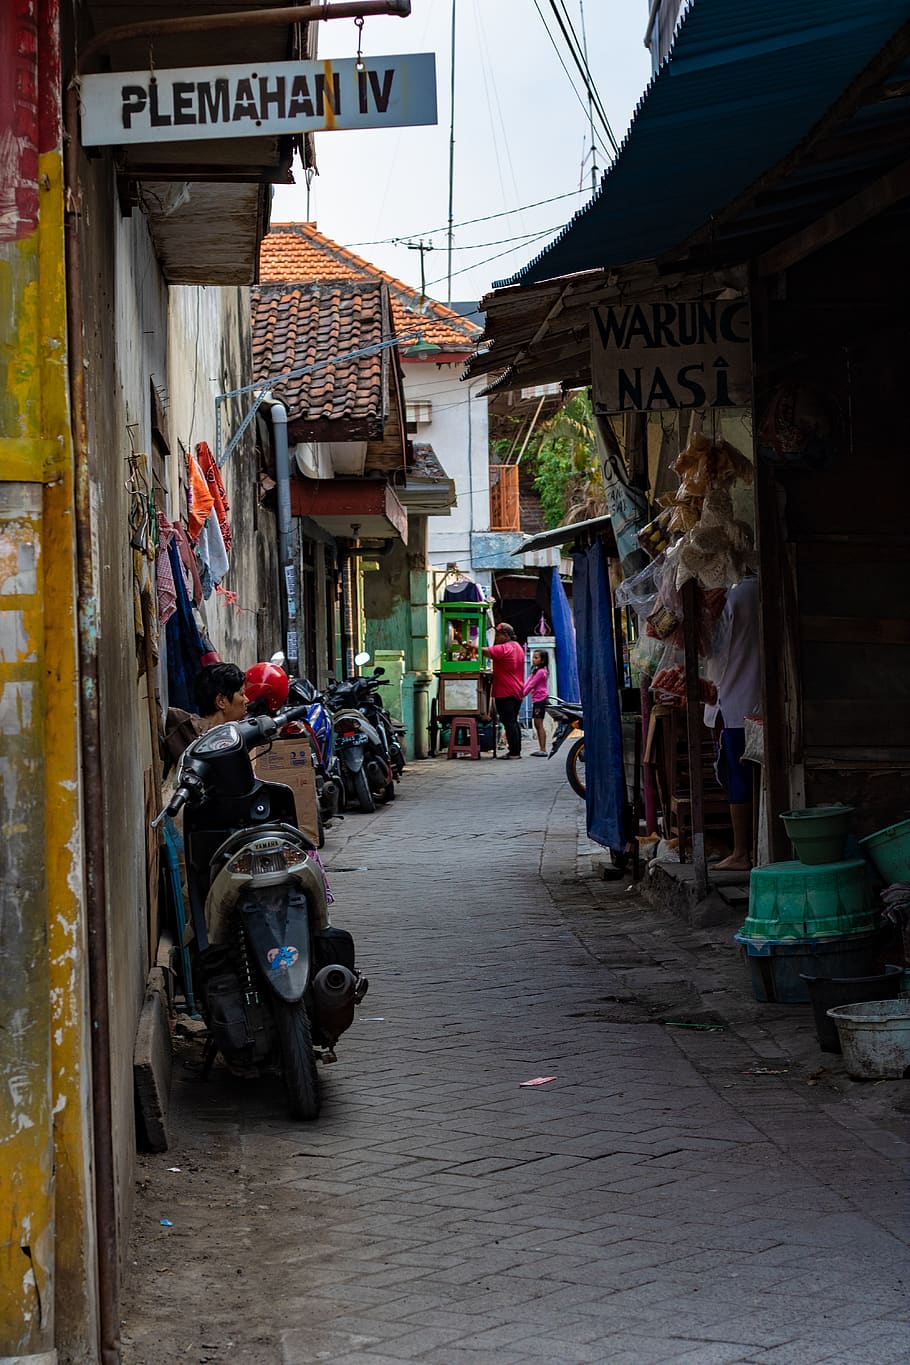 indonesia, surabaya, jl plemahan iv, street, street photography